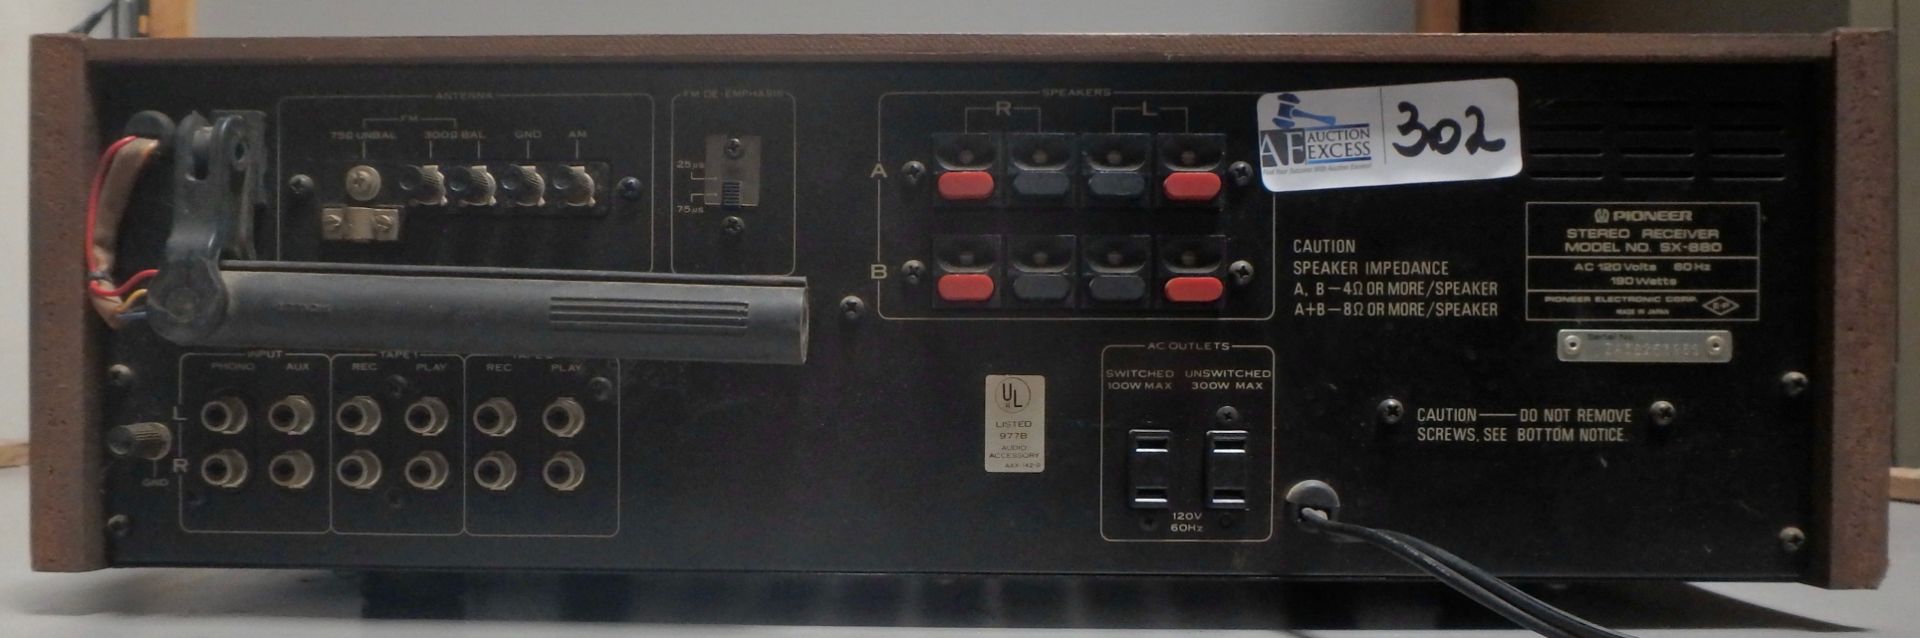 VINTAGE PIONEER SX-880 AM/FM RECEIVER - Image 3 of 3